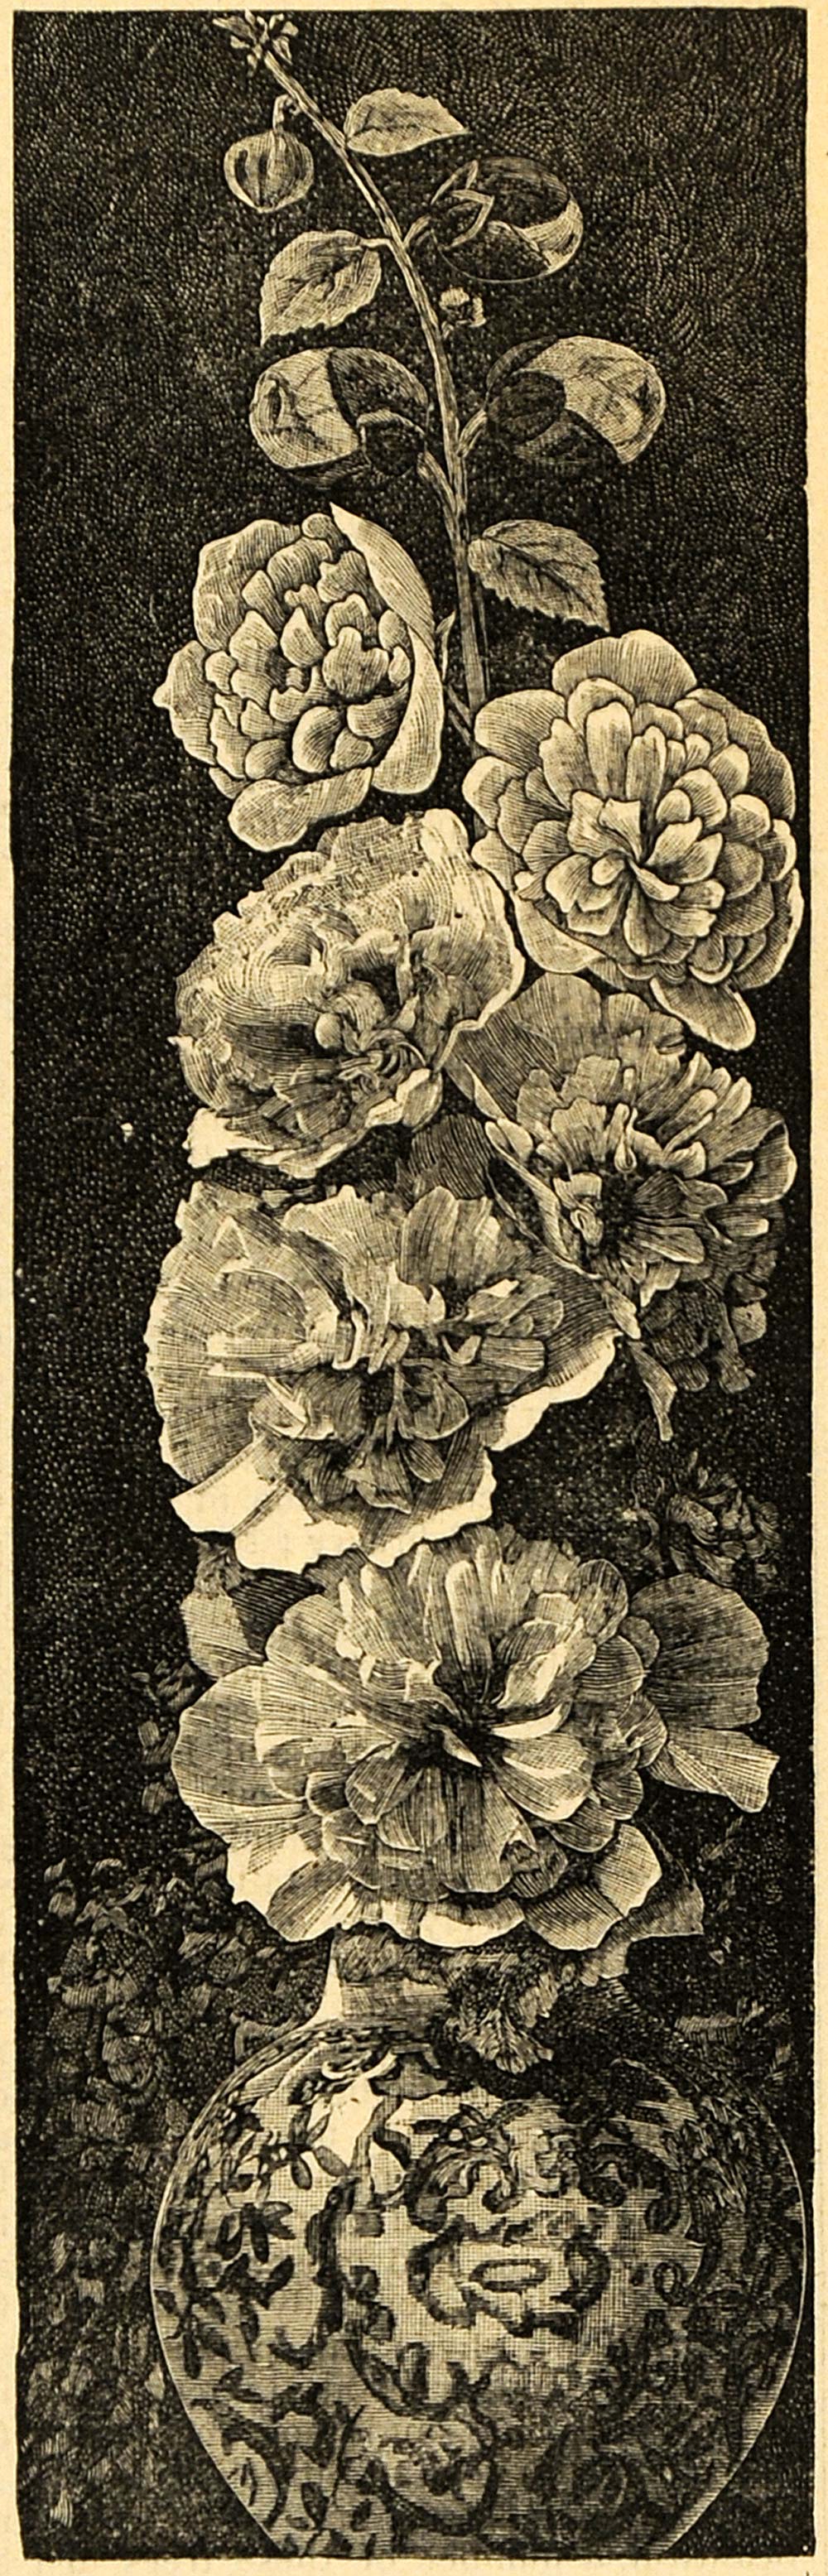 1895 Print Alcea Flowers Hollyhocks Malvaceae Family - ORIGINAL HISTORIC MAY1